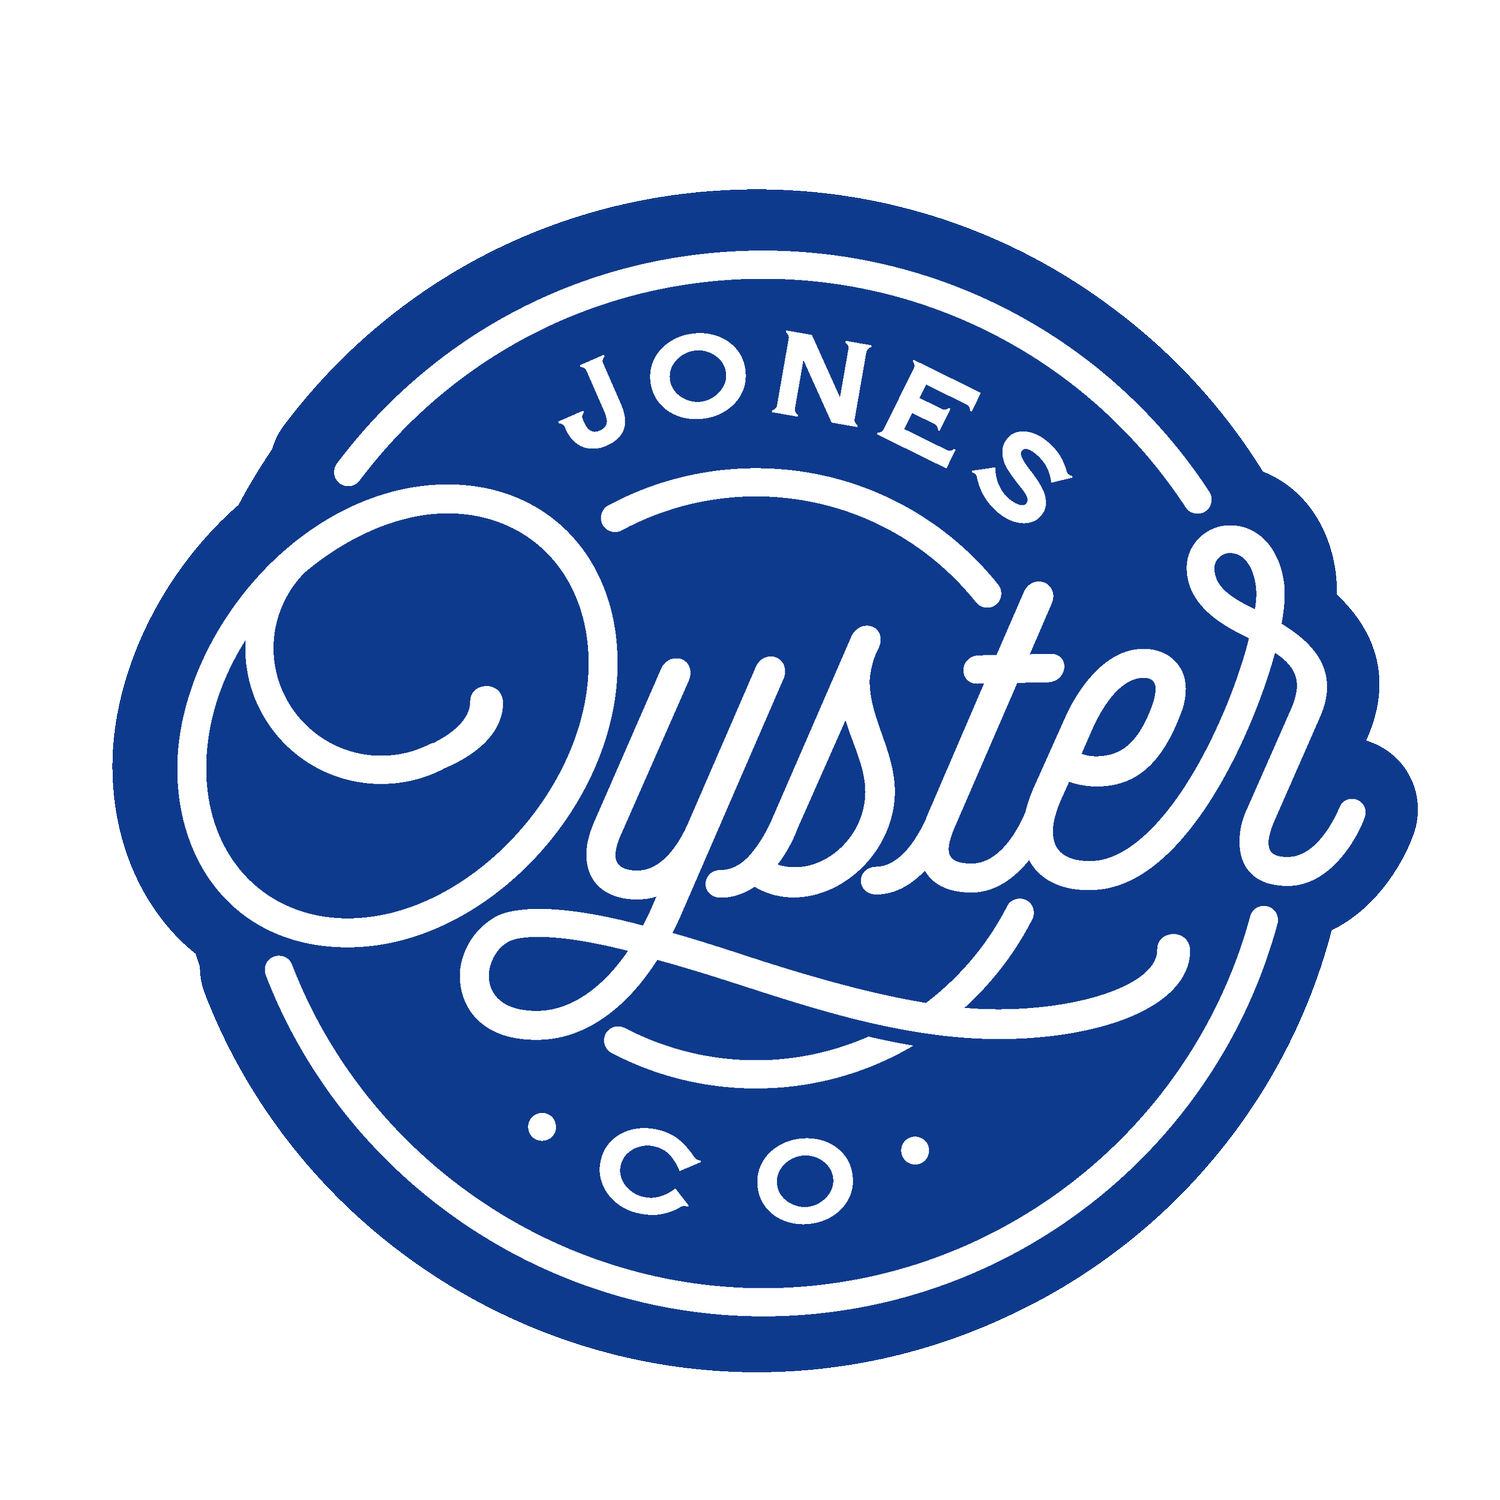 Jones Oyster Co.